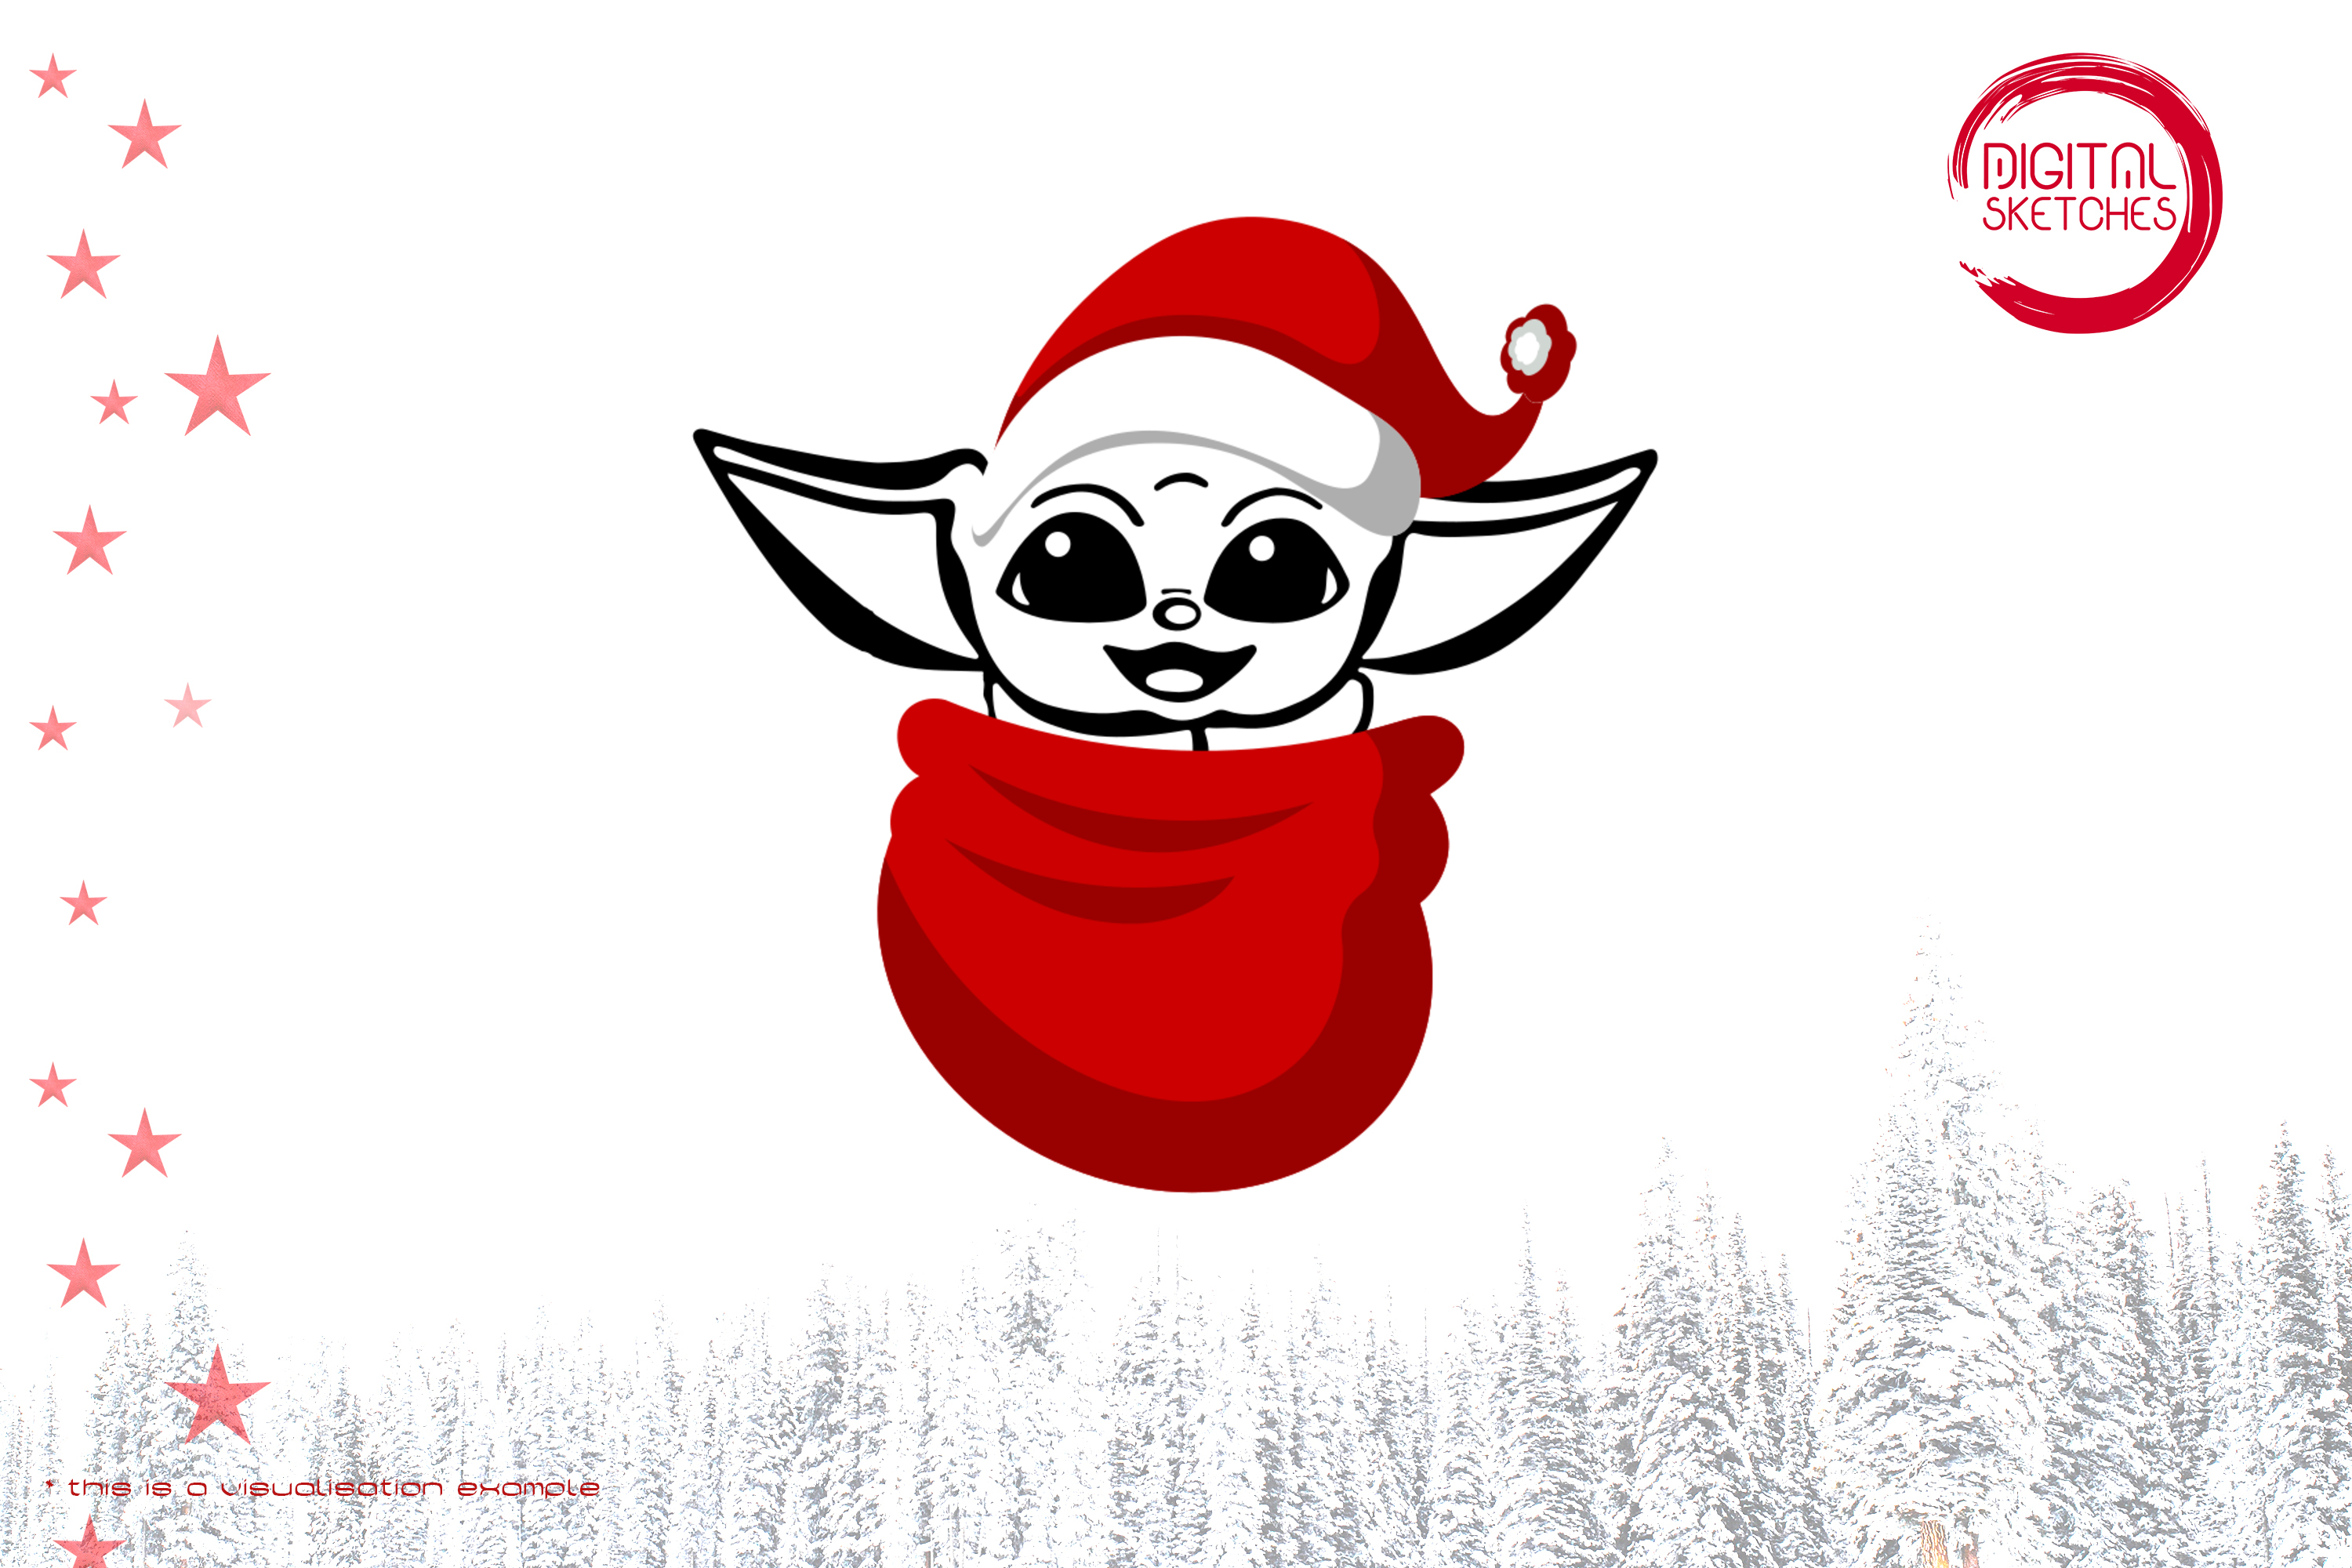 Tribute To Fictional Character Grogu aka Baby Yoda (Christmas)